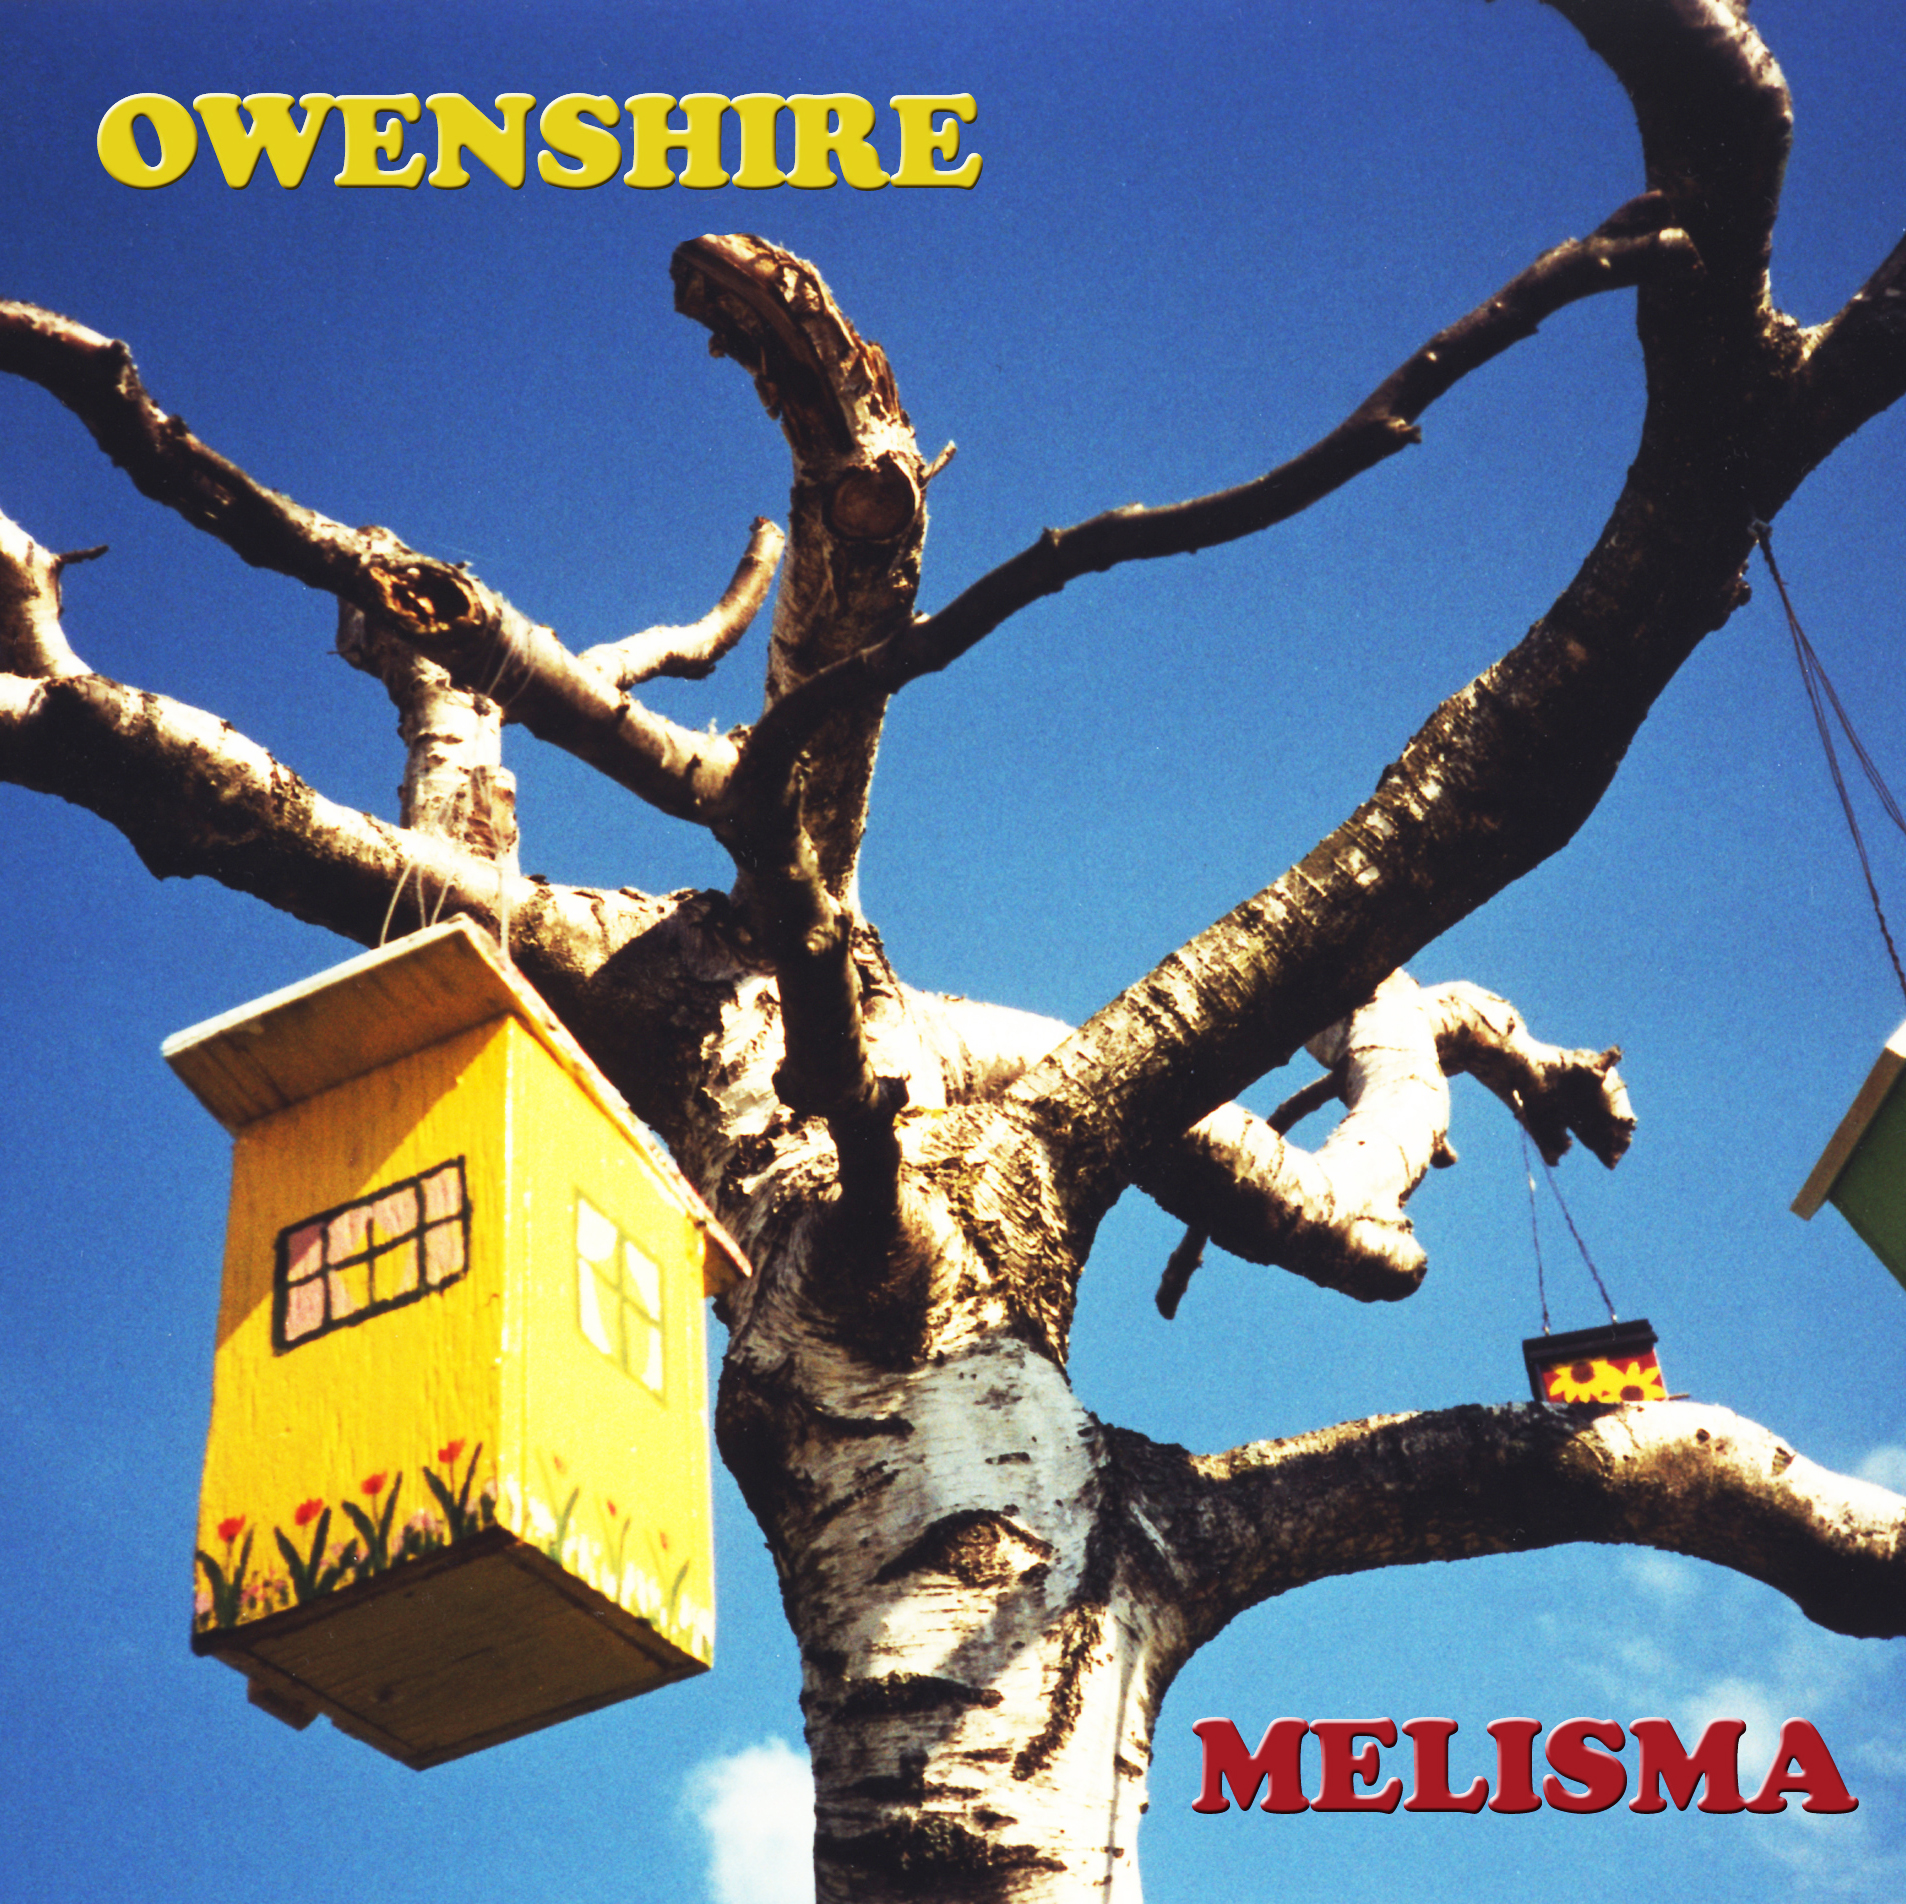 Owenshire Melisma Album Cover Robert Muhlbock